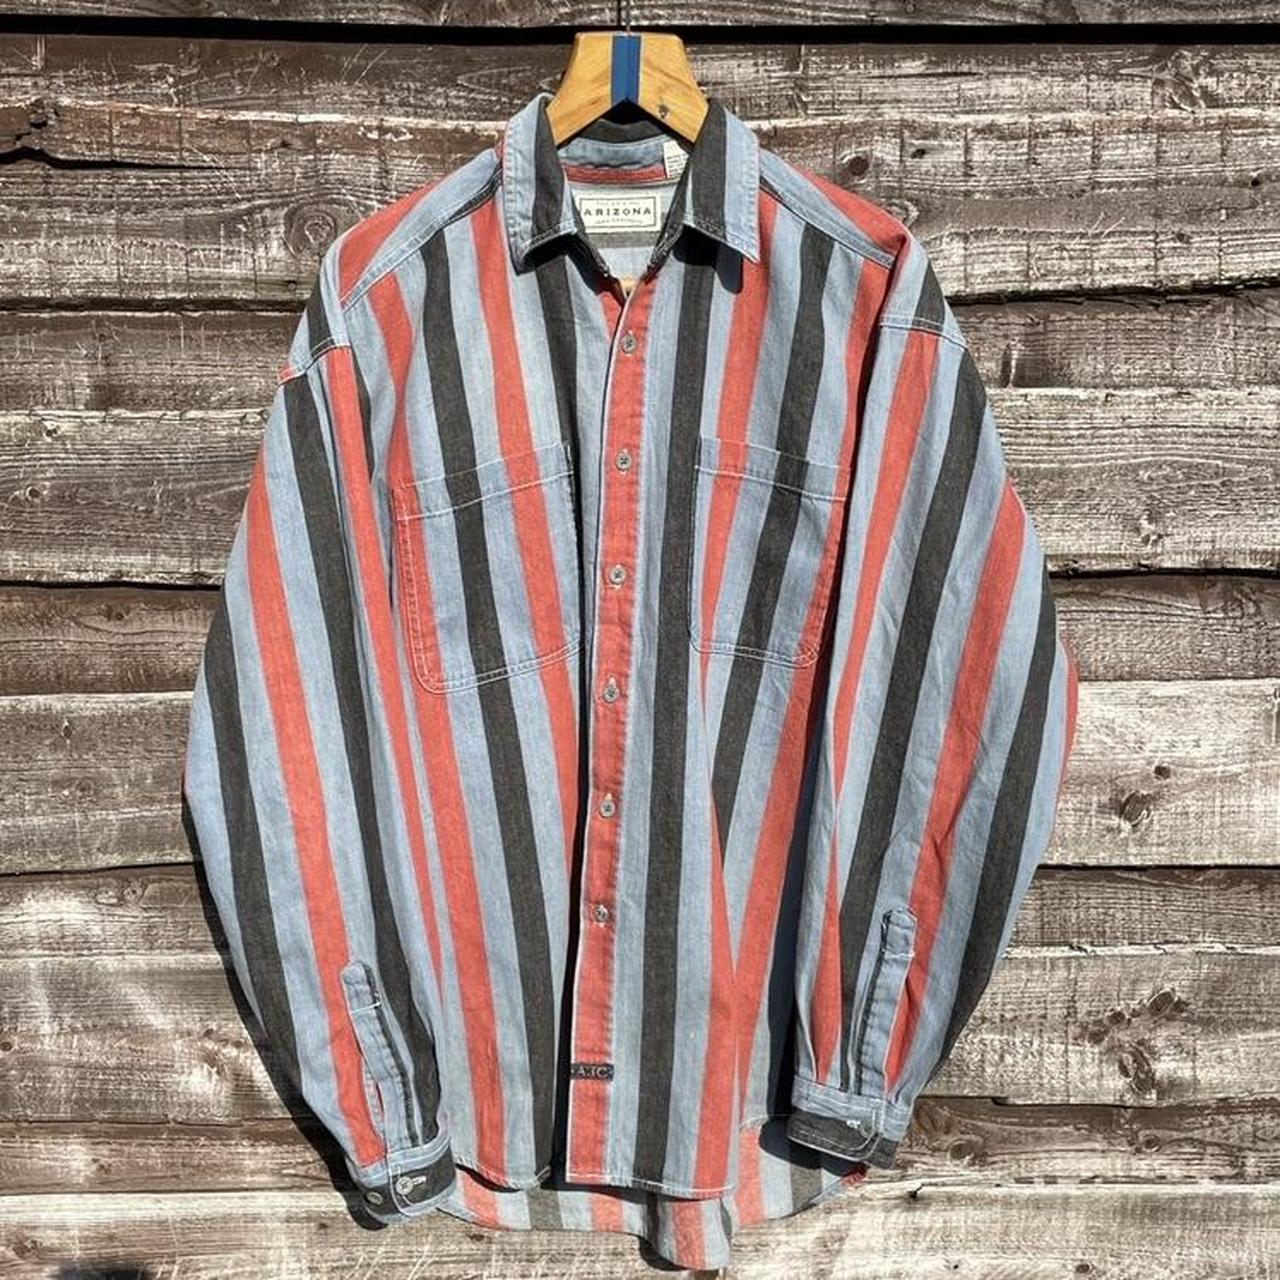 Vintage Colourful Striped Shirt by Arizona... - Depop